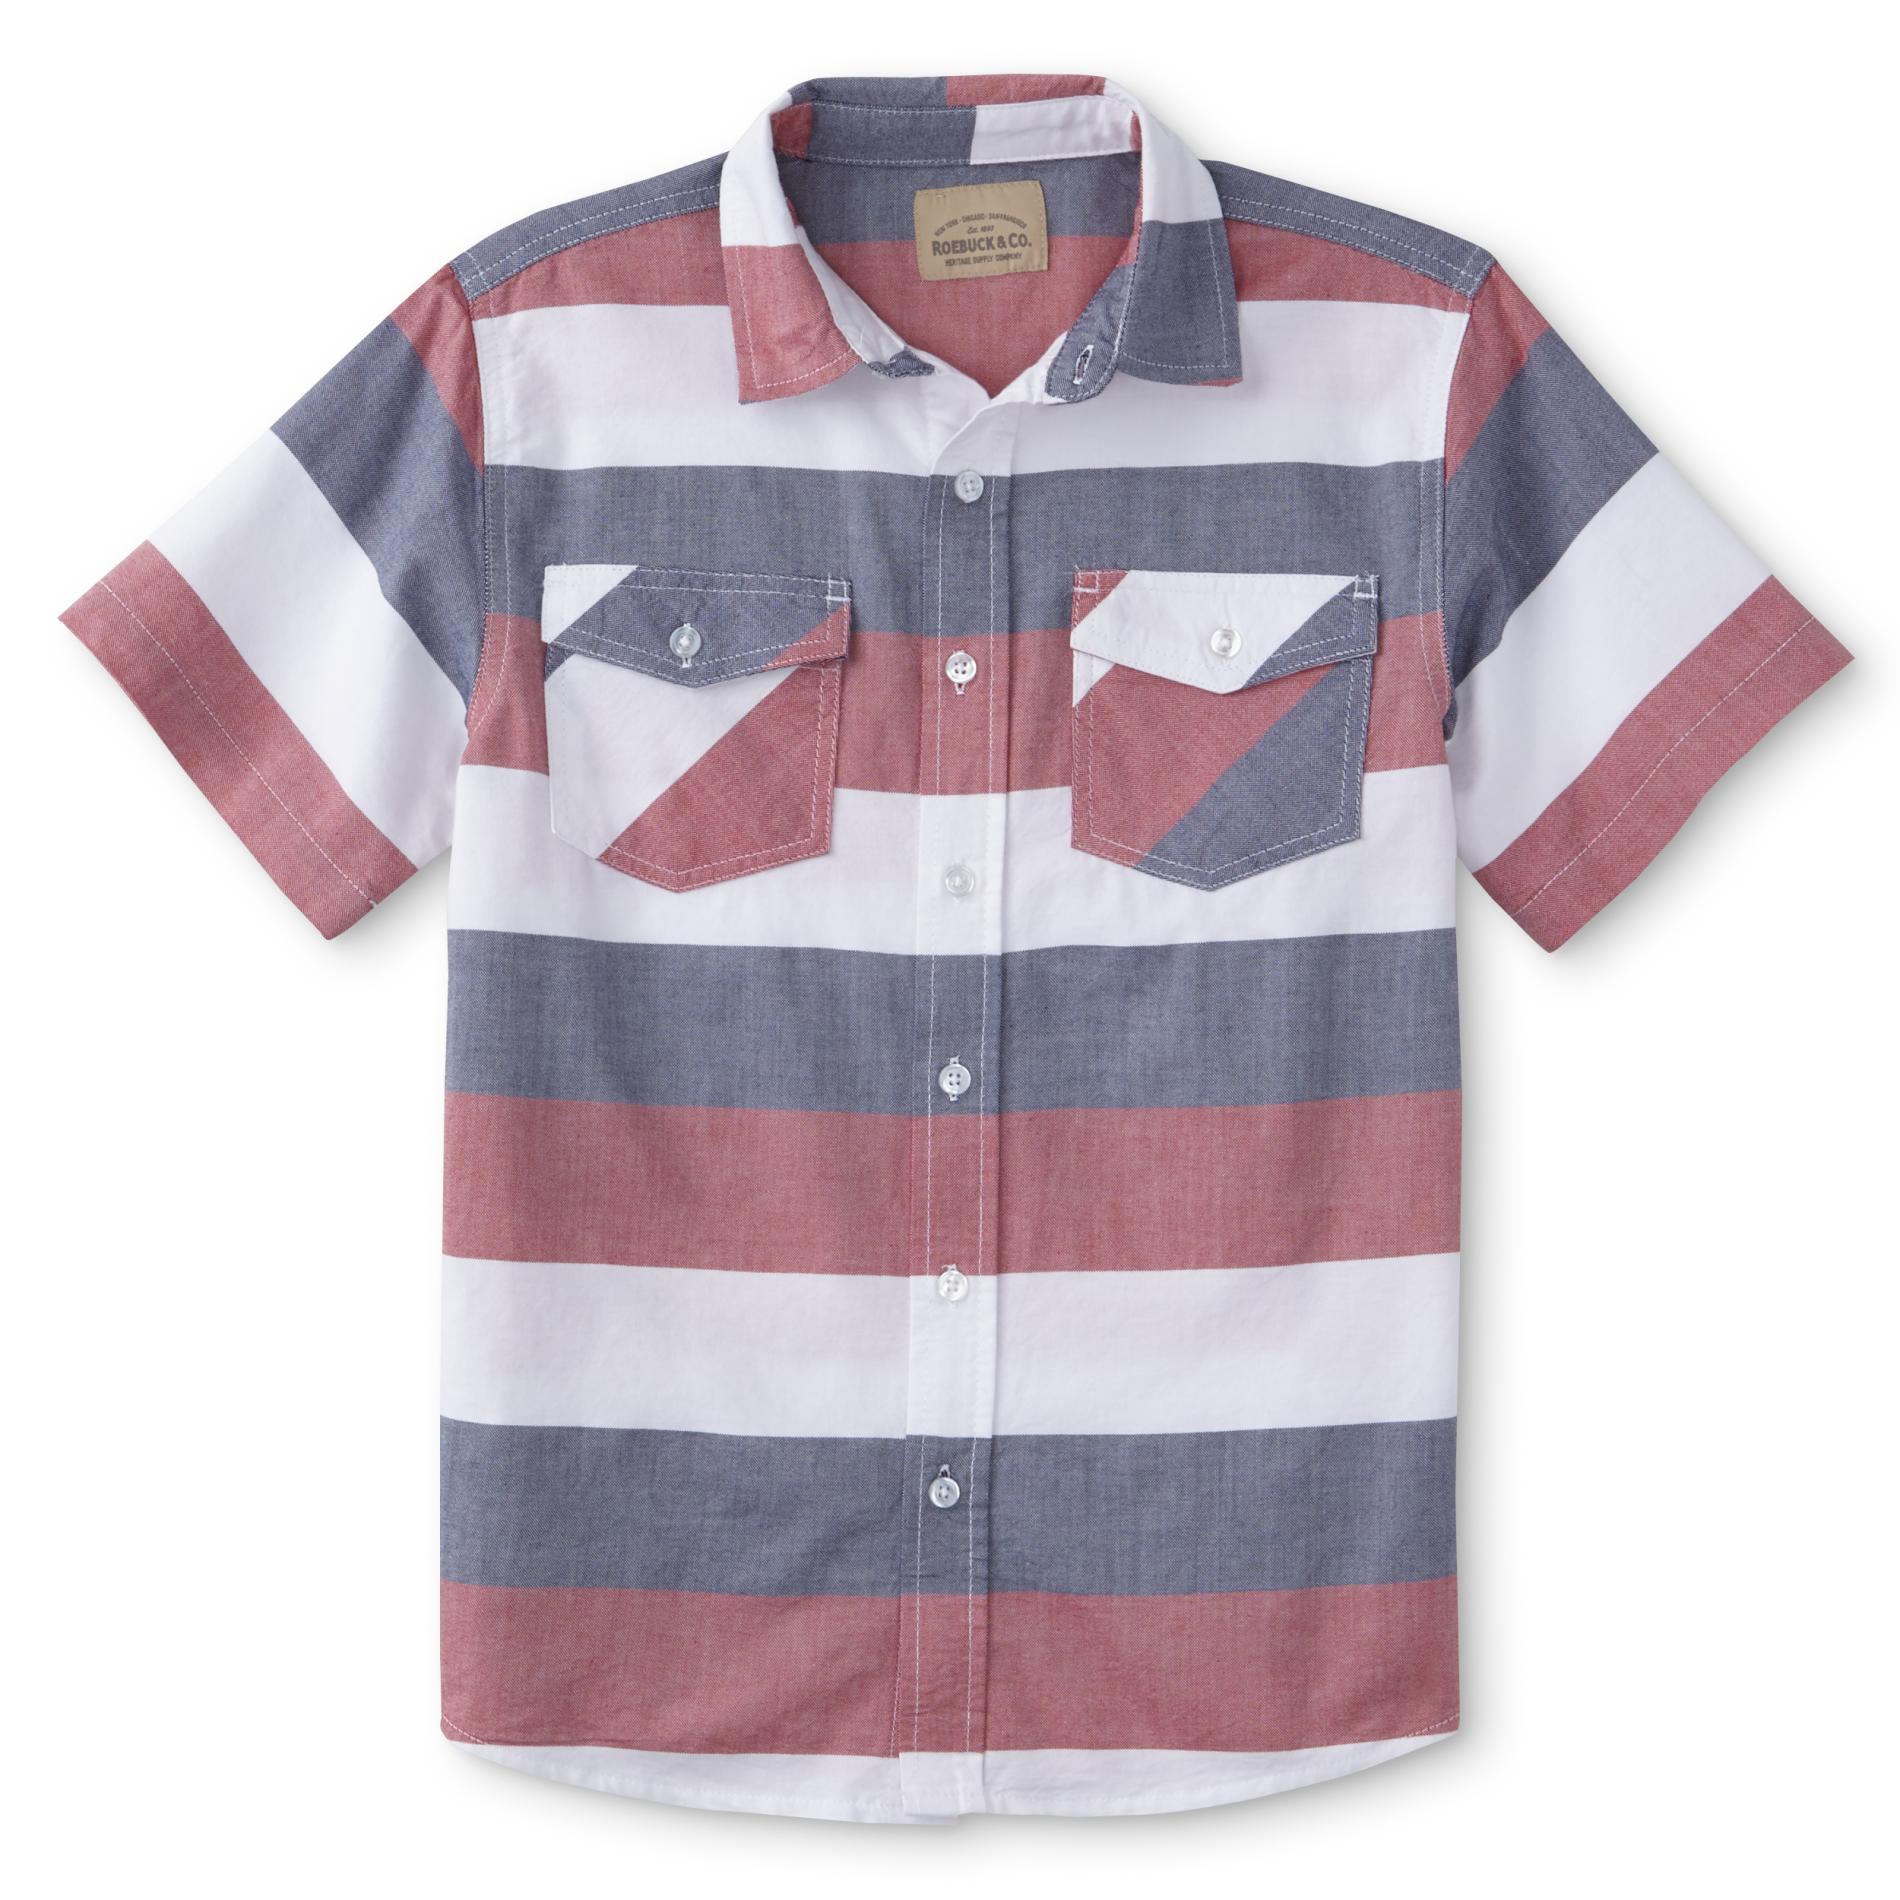 Roebuck & Co. Boys' Short-Sleeve Shirt - Striped